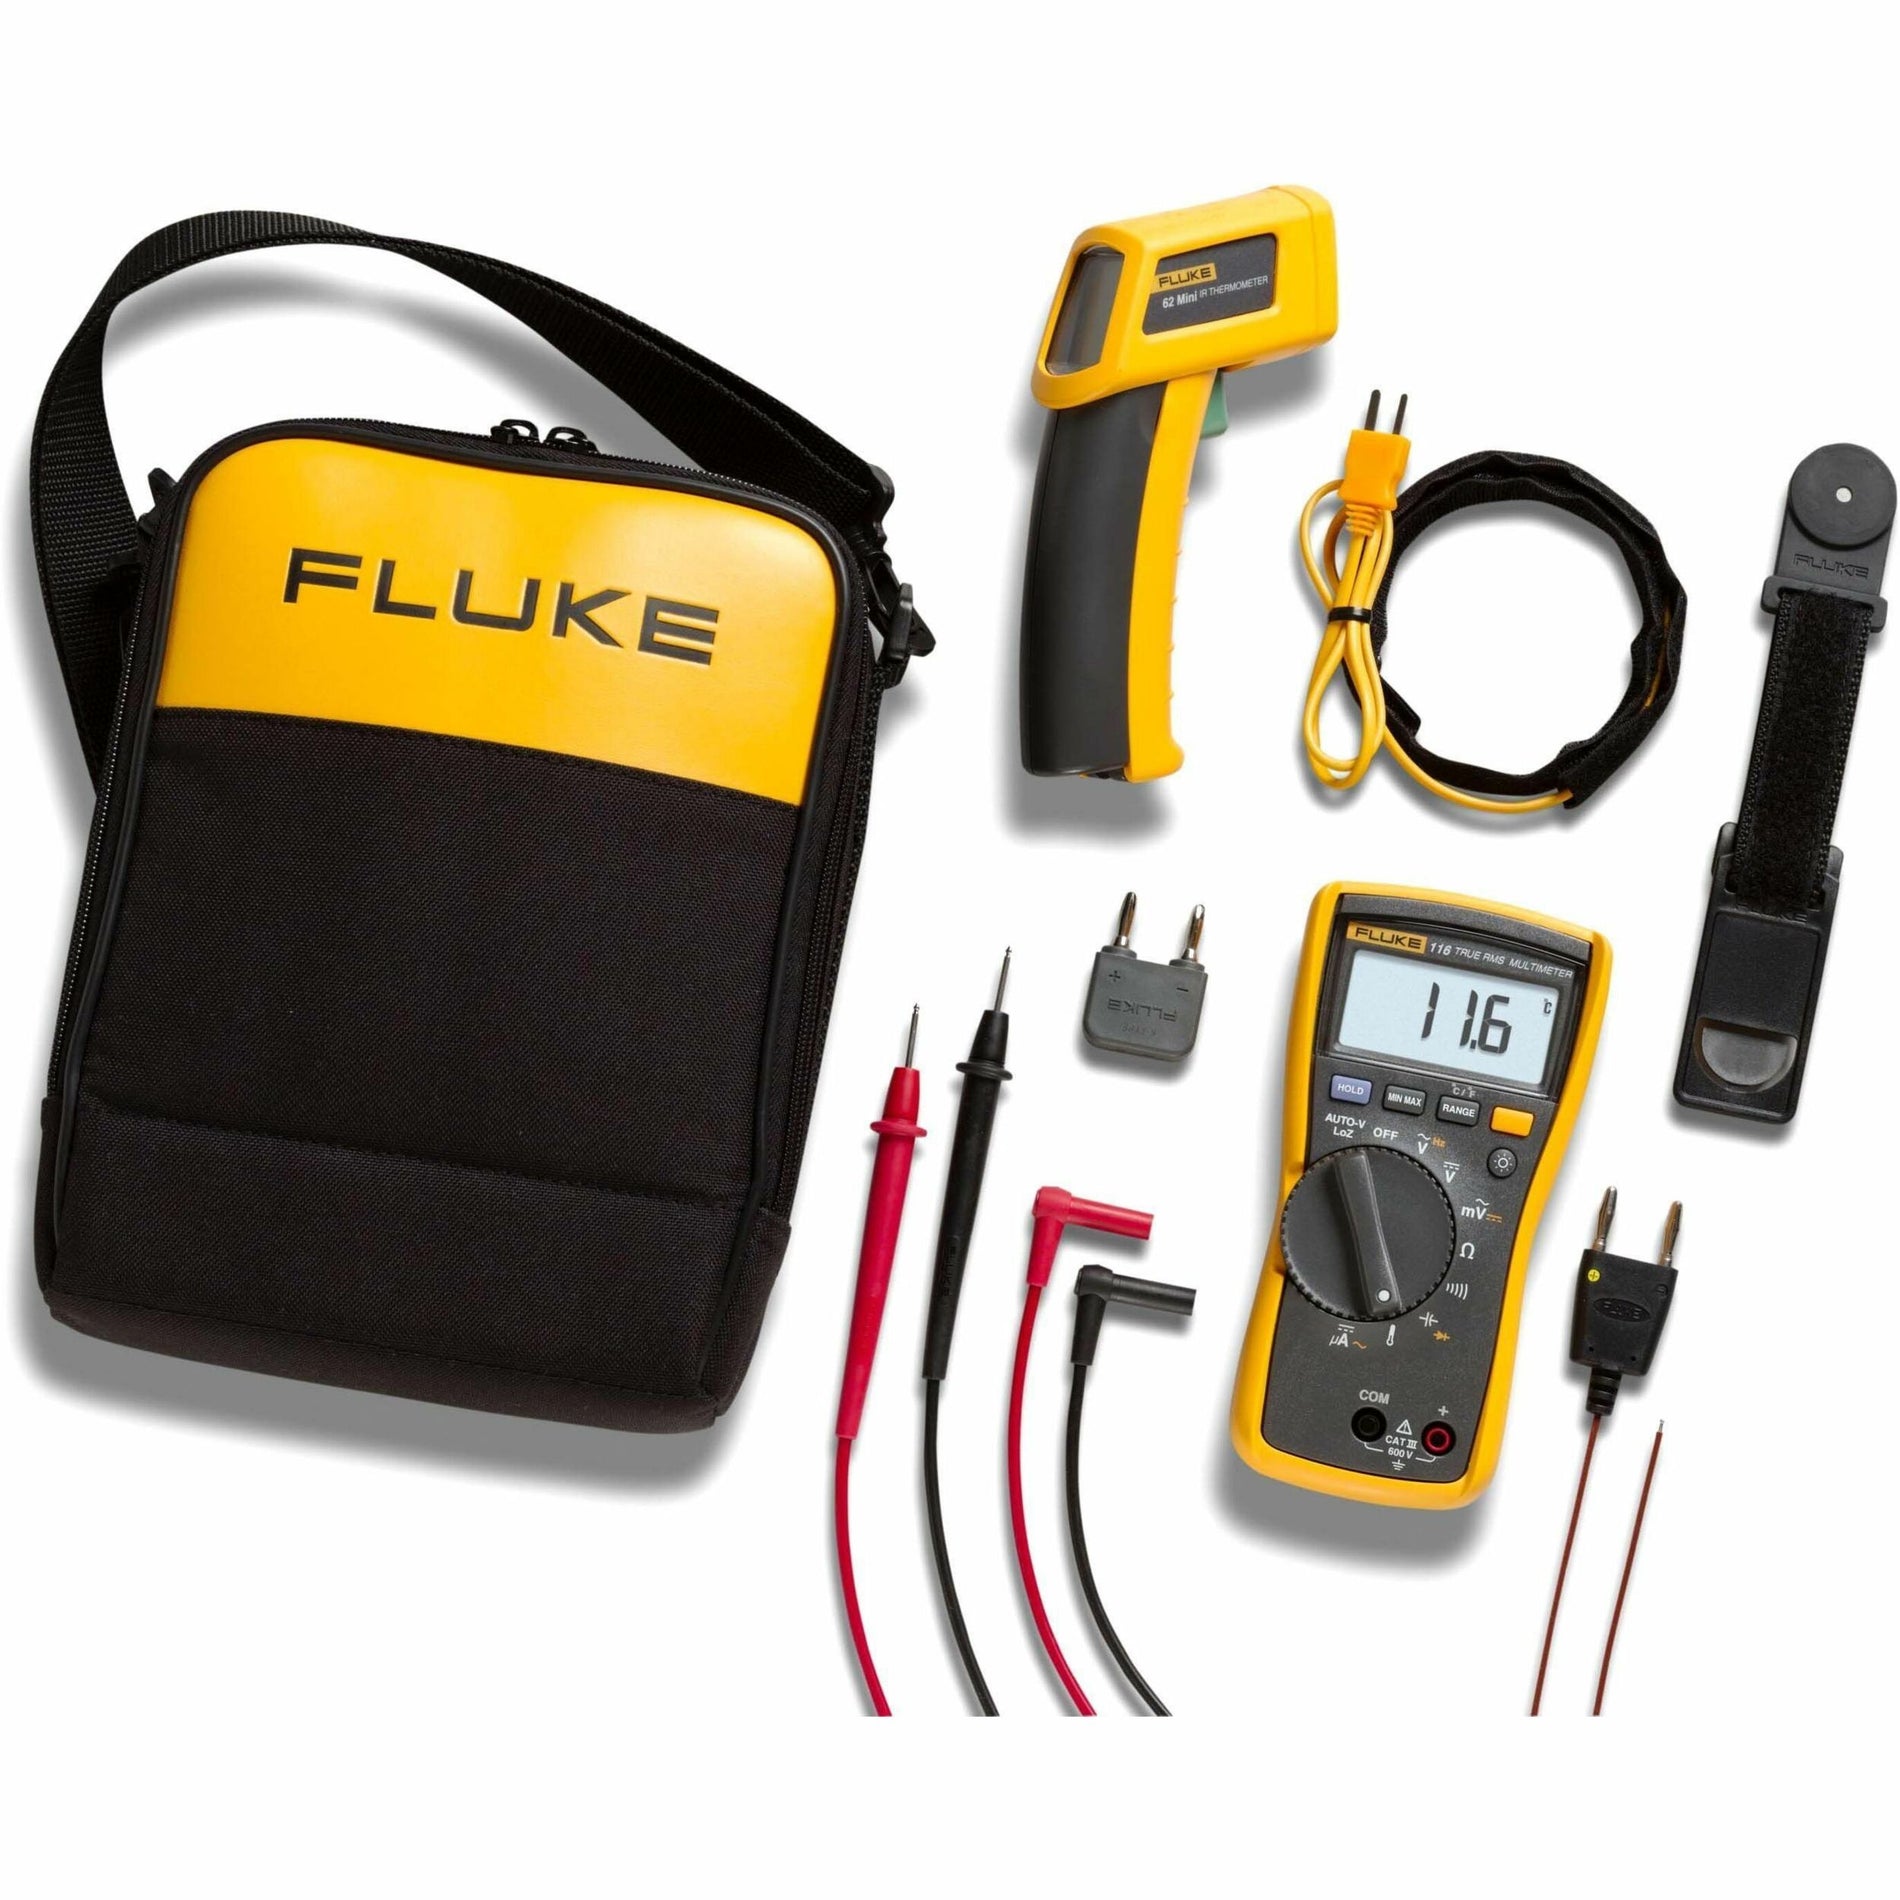 Fluke 116 HVAC Multimeter with Temperature and Microamps (FLUKE-116)